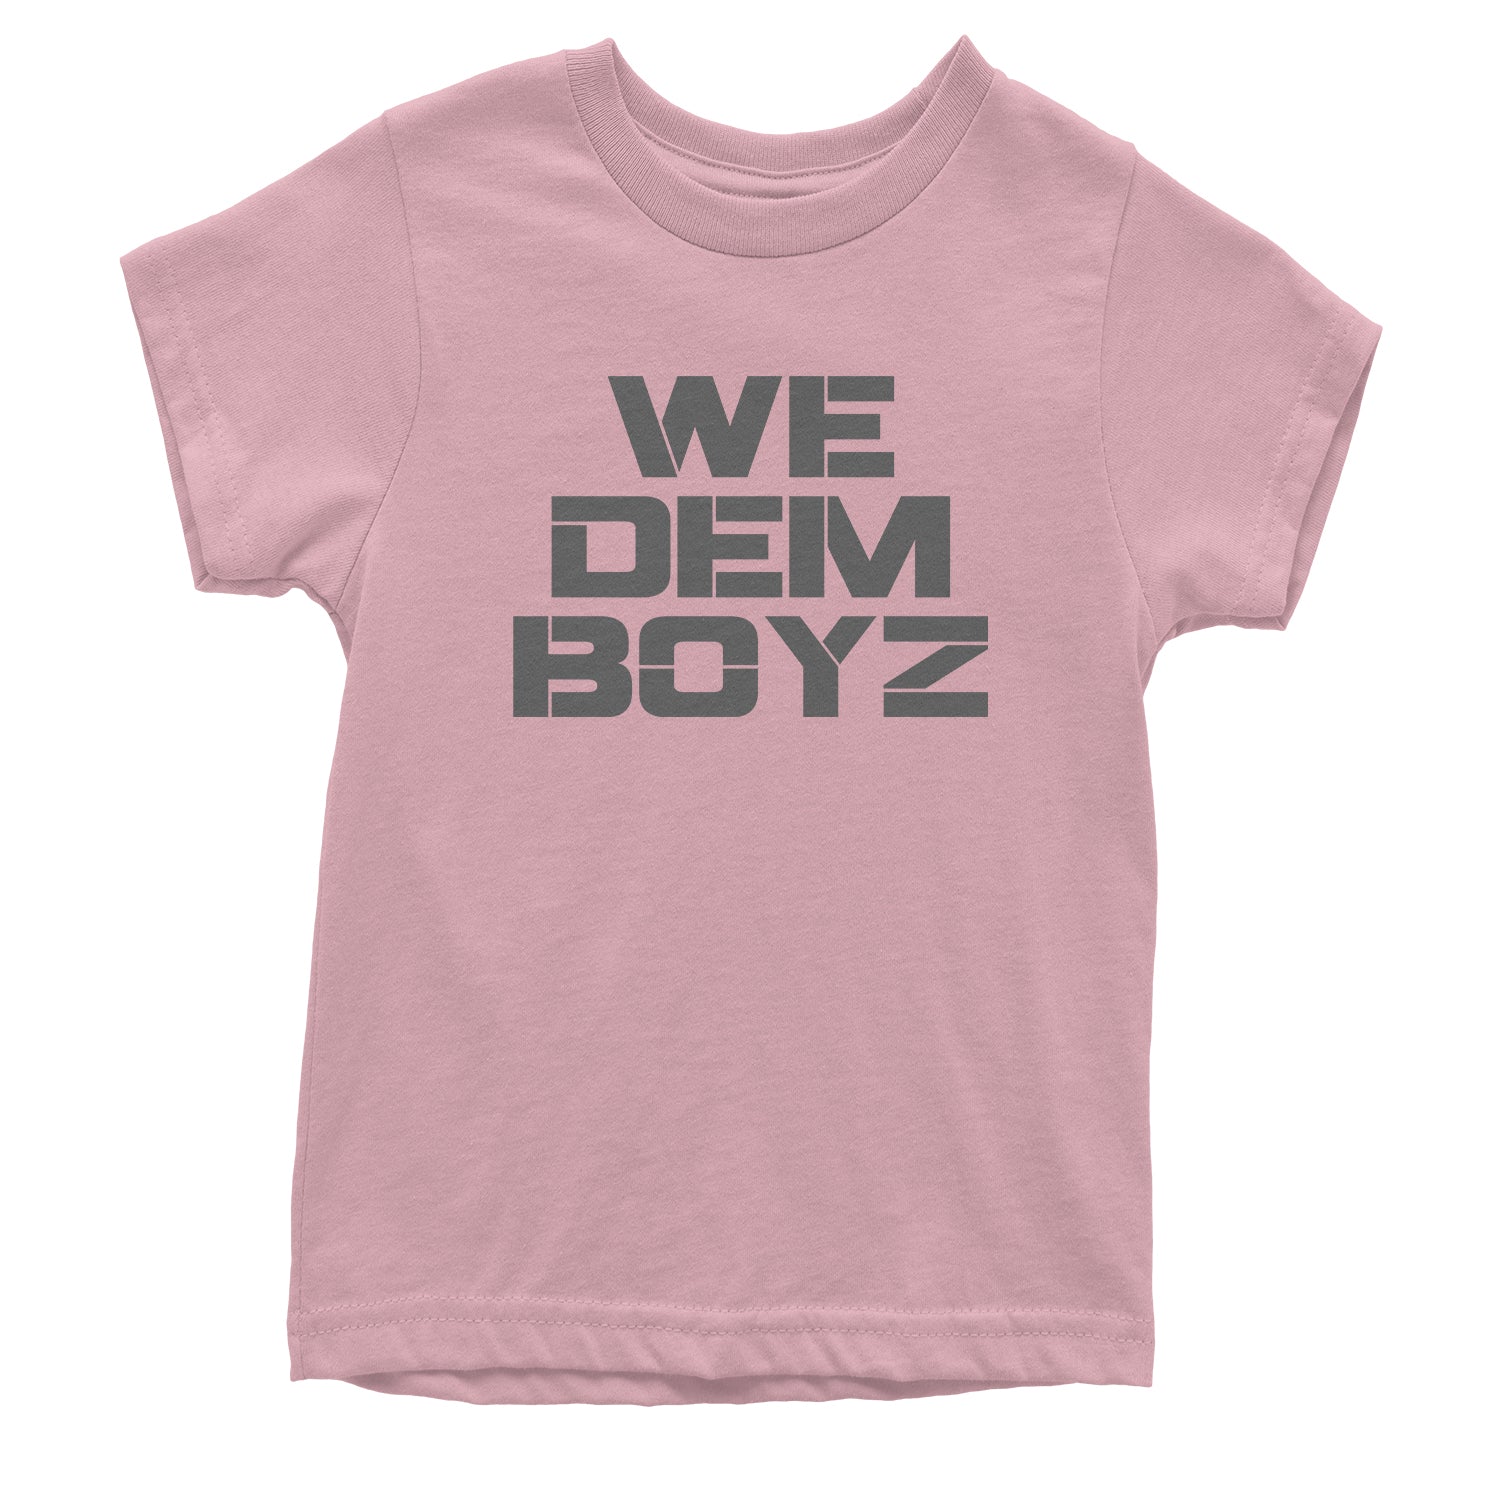 We dem Boys Dallas Youth T-Shirt - Kelly Green Kids Large